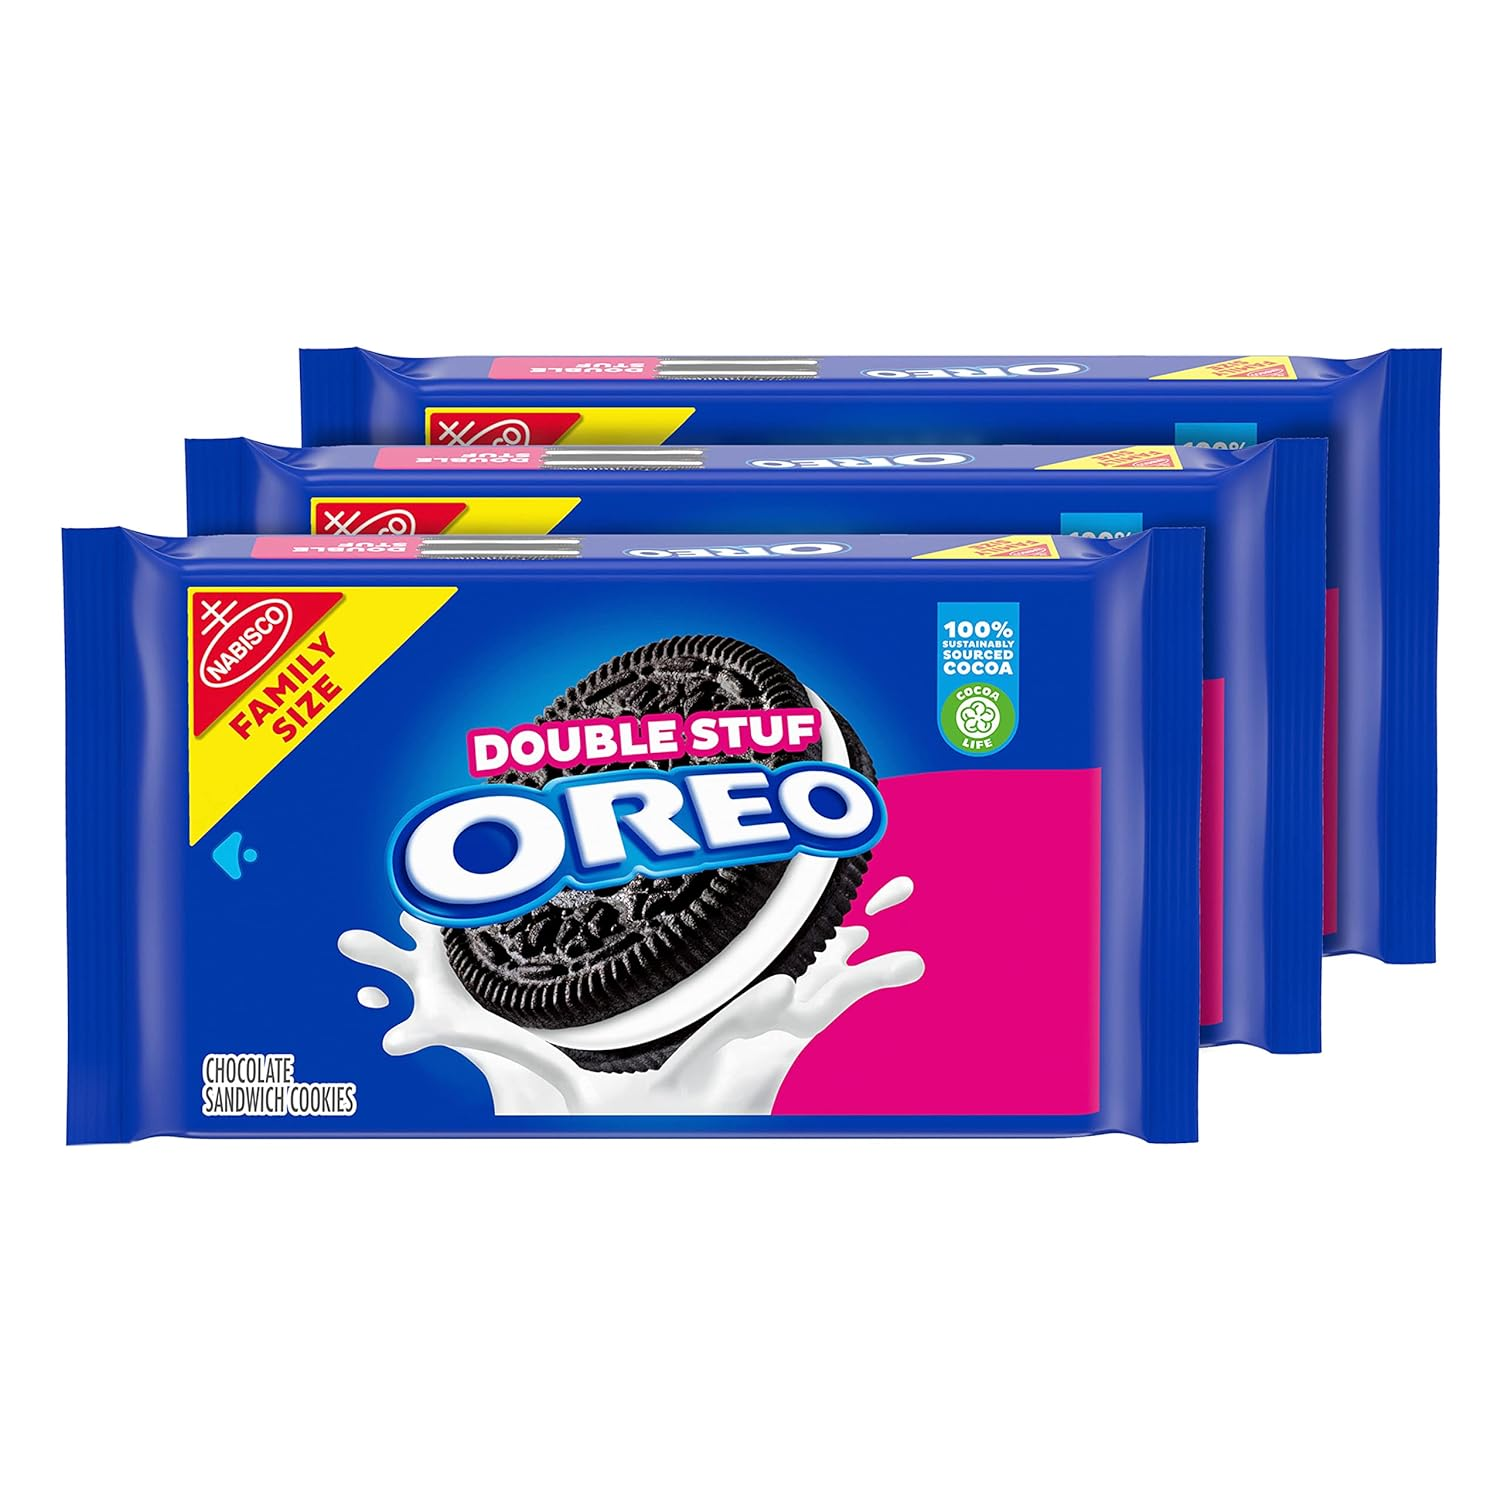 Amazon.com: OREO Double Stuf Chocolate Sandwich Cookies, Family Size, 3 Packs : Oreo: Books $8.46